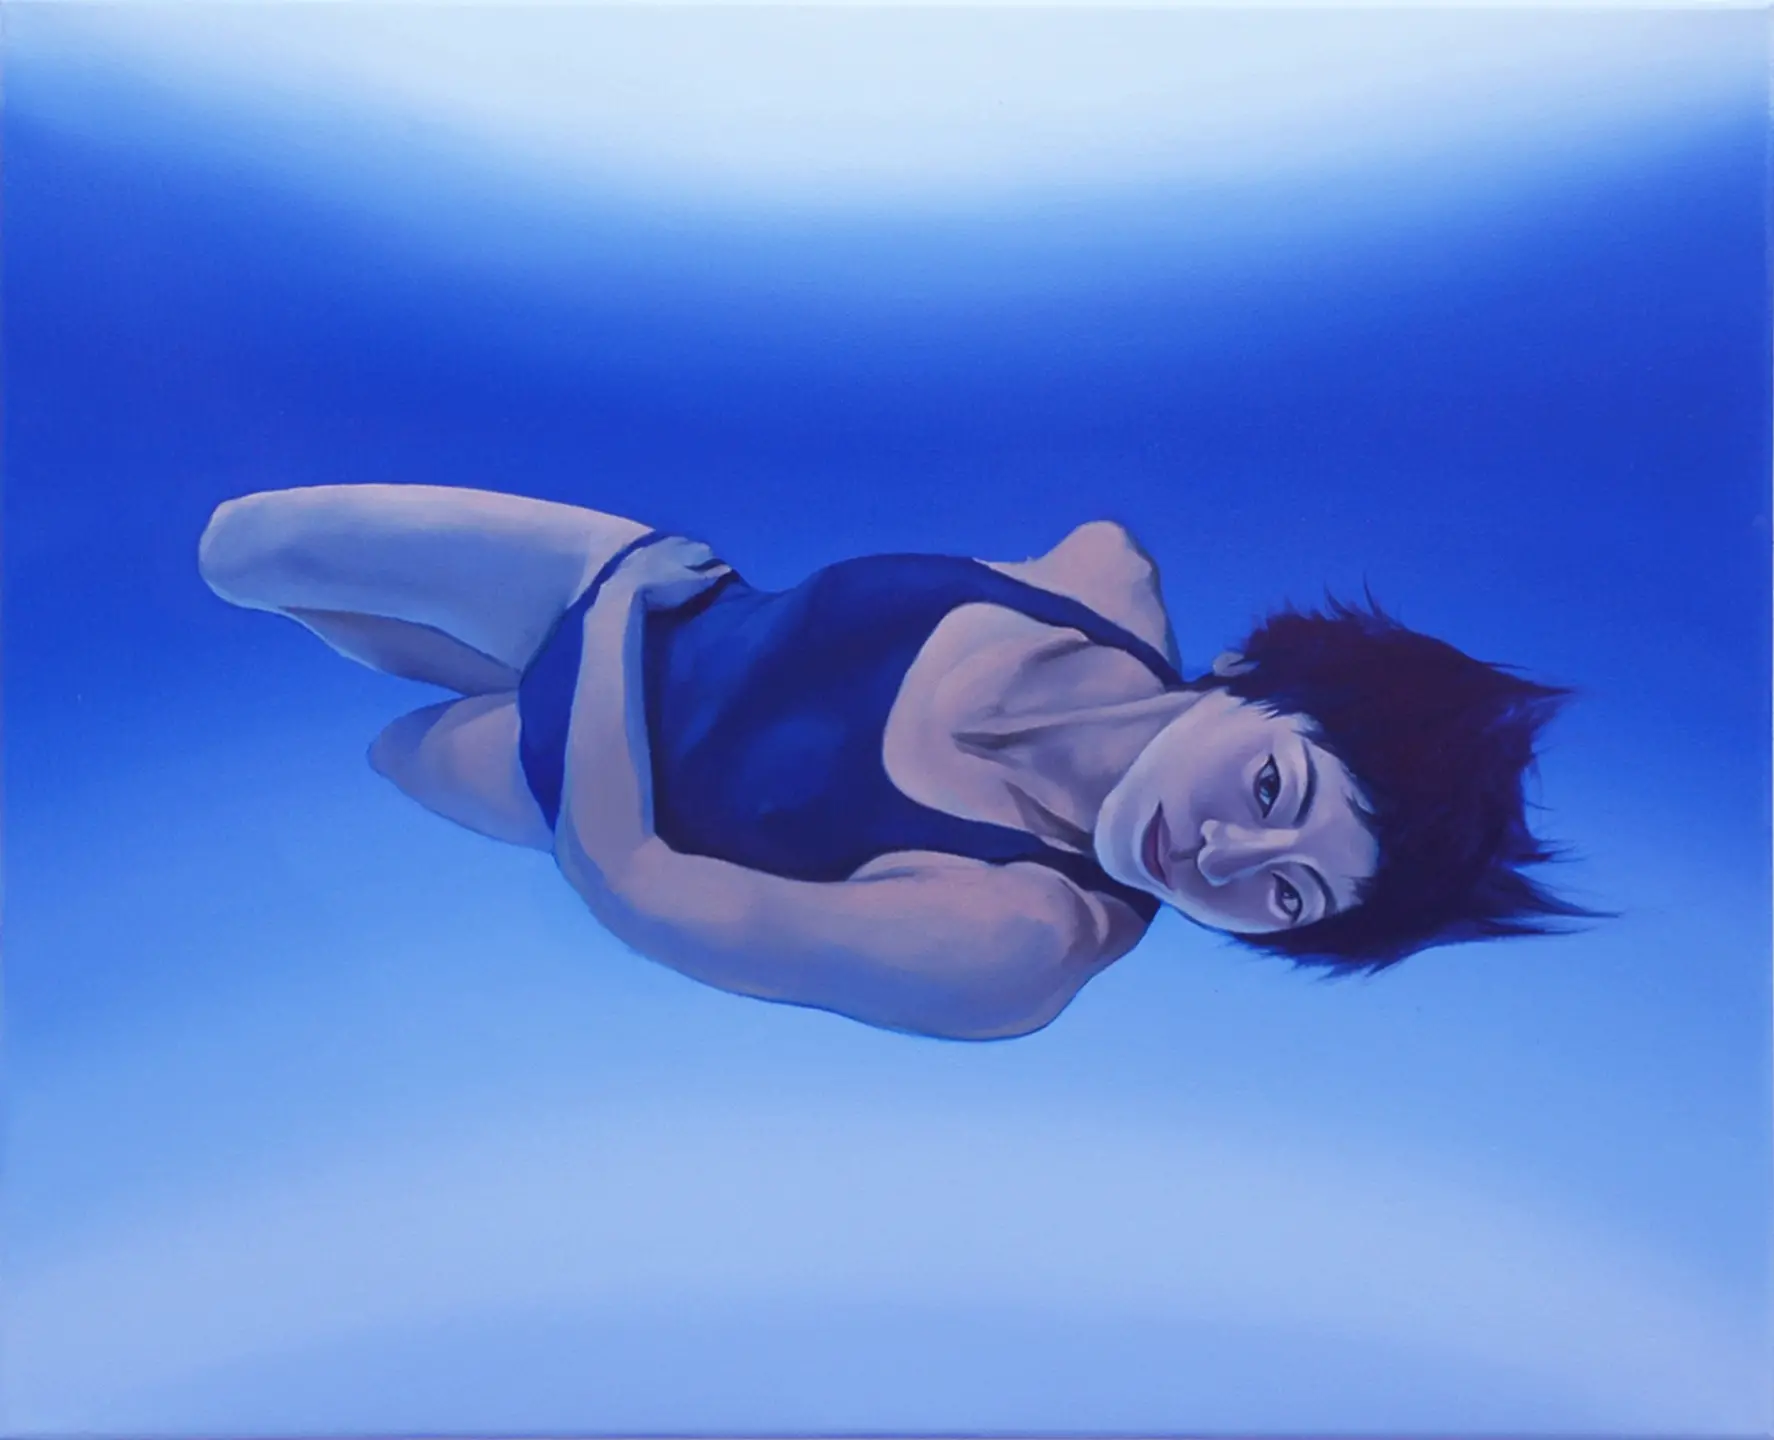 Stockholm mermaids - Chih-Lin Yeh, 2023, olja på duk/oil on canvas, 80 x 65 cm